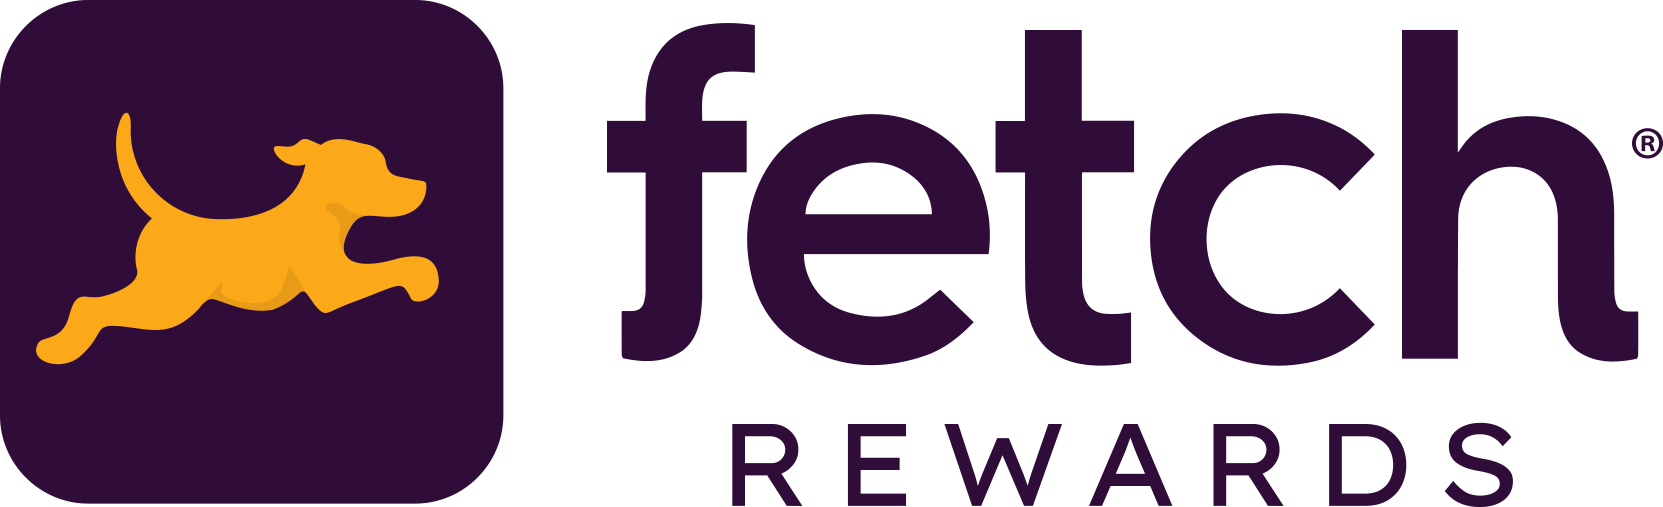 Free Rewards on Groceries | Fetch Rewards